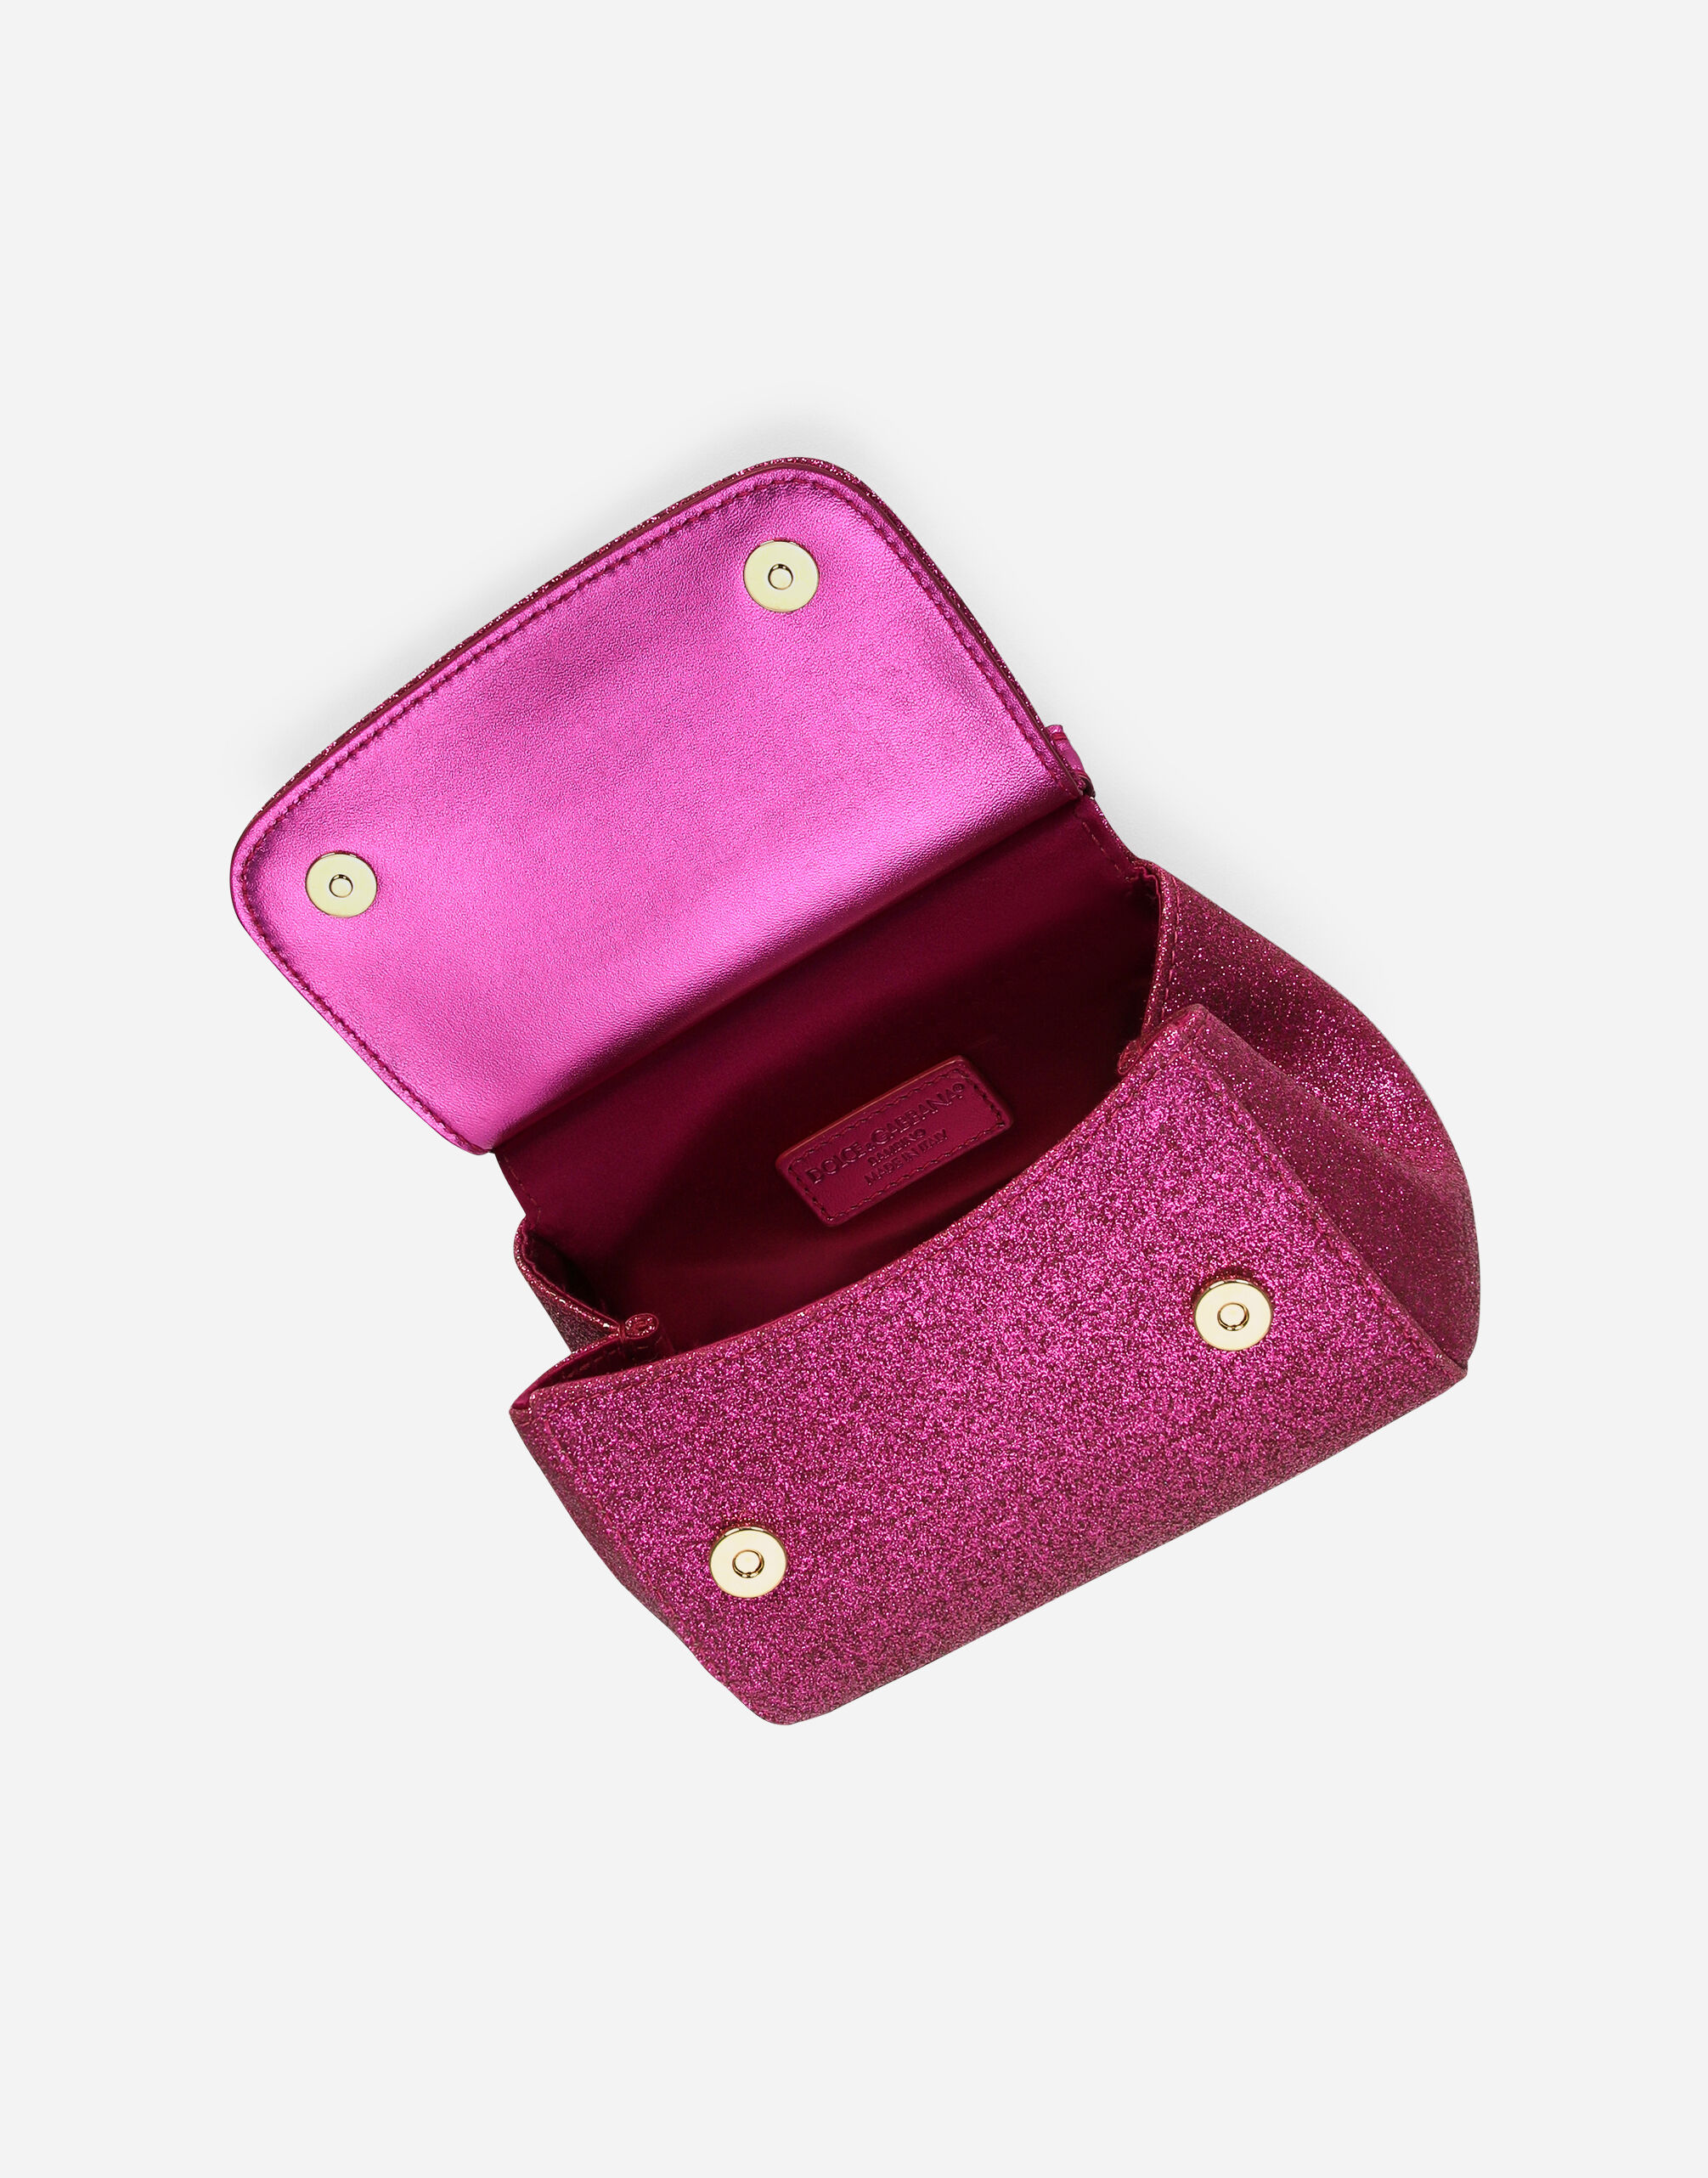 Mini Sicily handbag in Fuchsia for | Dolce&Gabbana® US